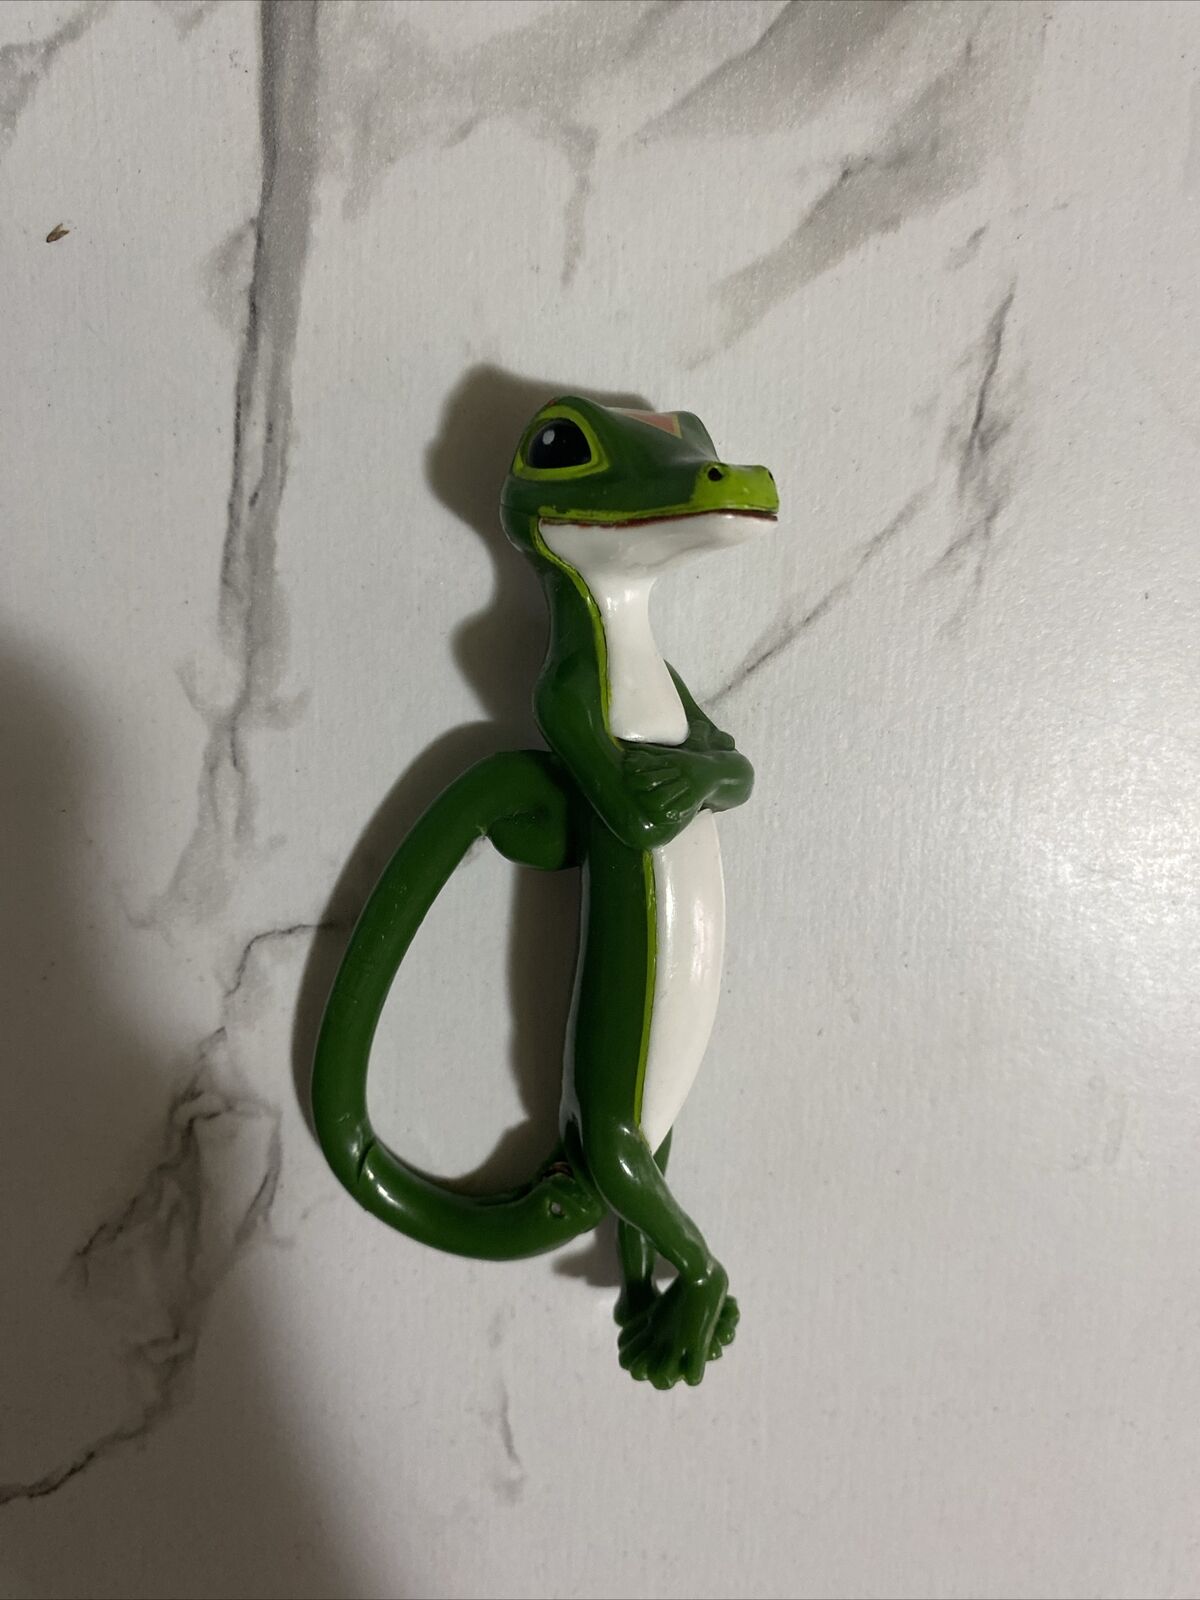 Geico Gecko Keychain Green Standing Figure Promo Insurance Company Clip Plastic